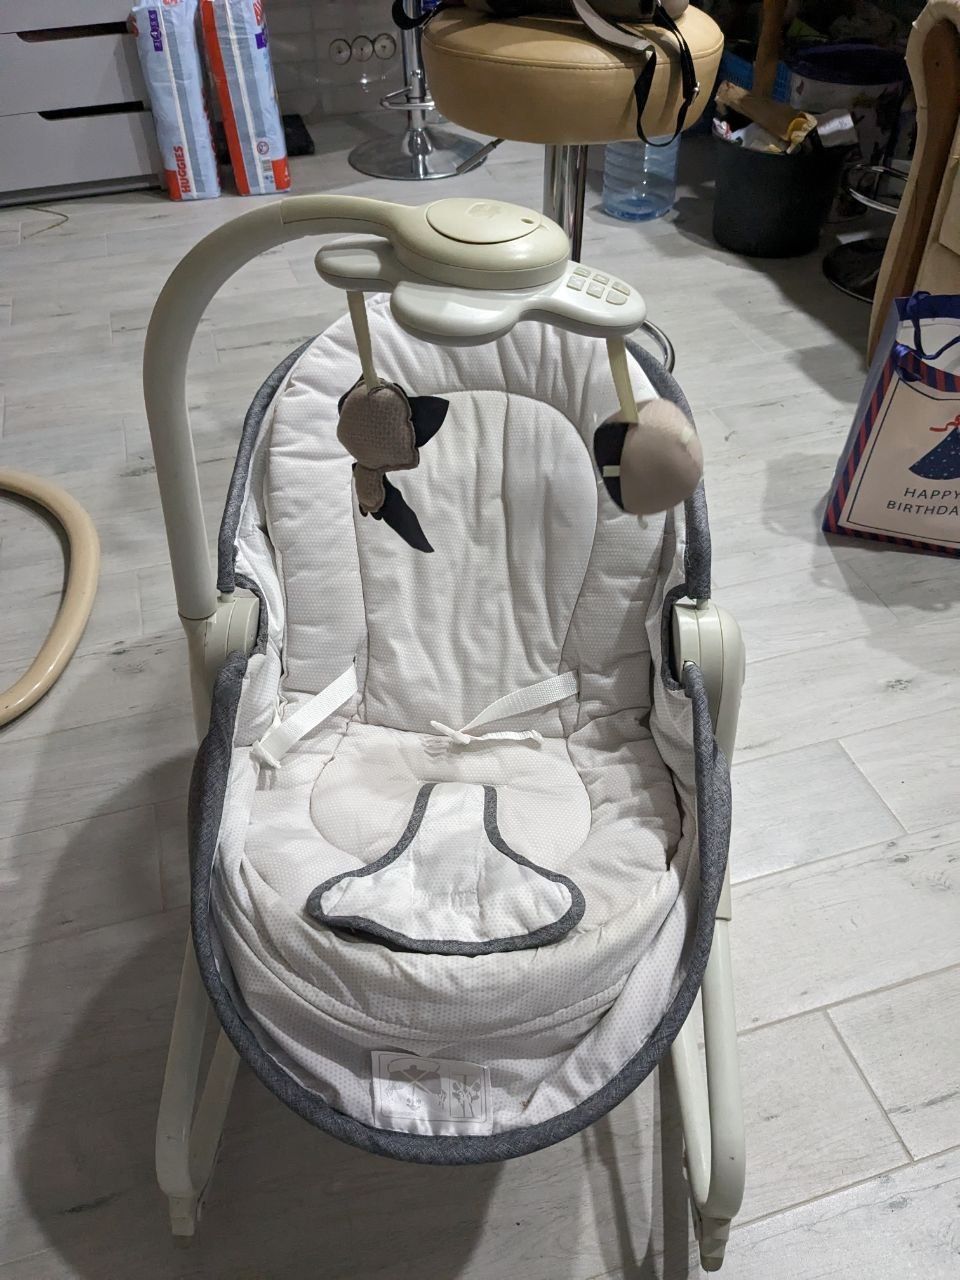 Дитяче крісло гойдалка